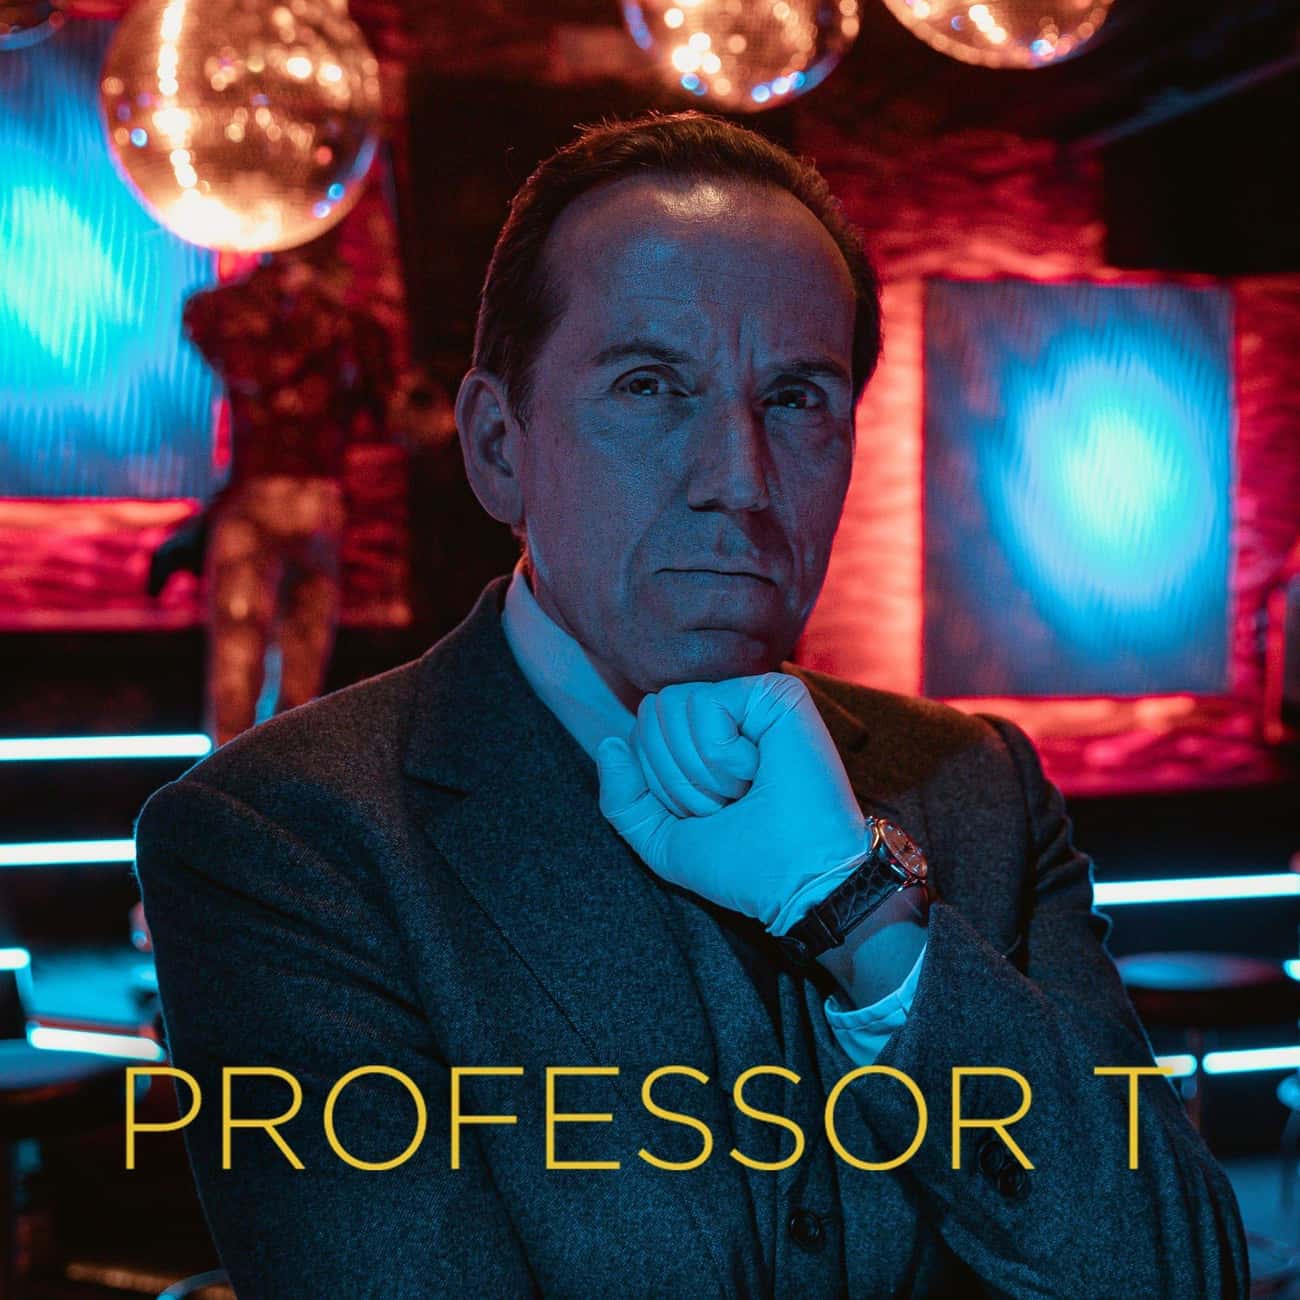 Professor T